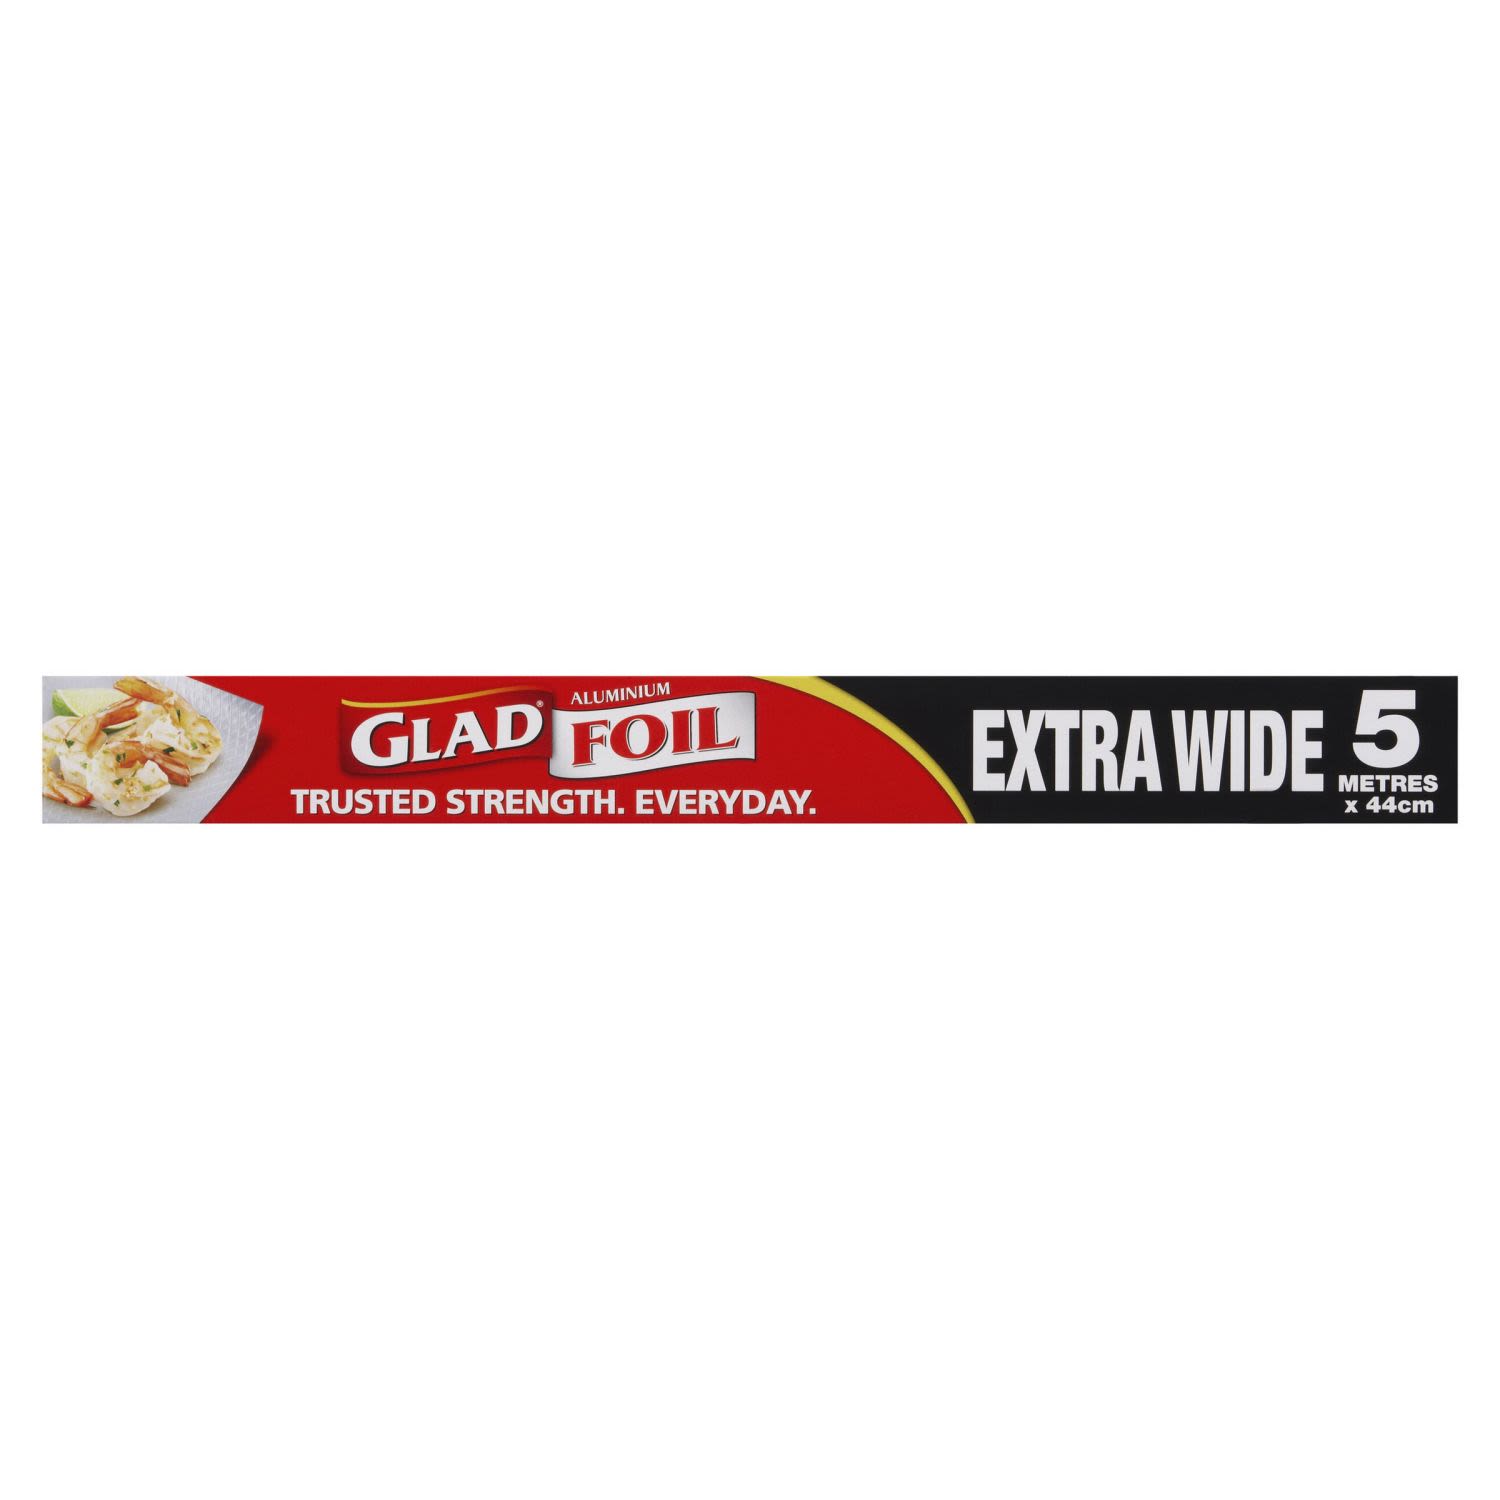 Glad Foil Extra Wide 5m x 44cm, 1 Each